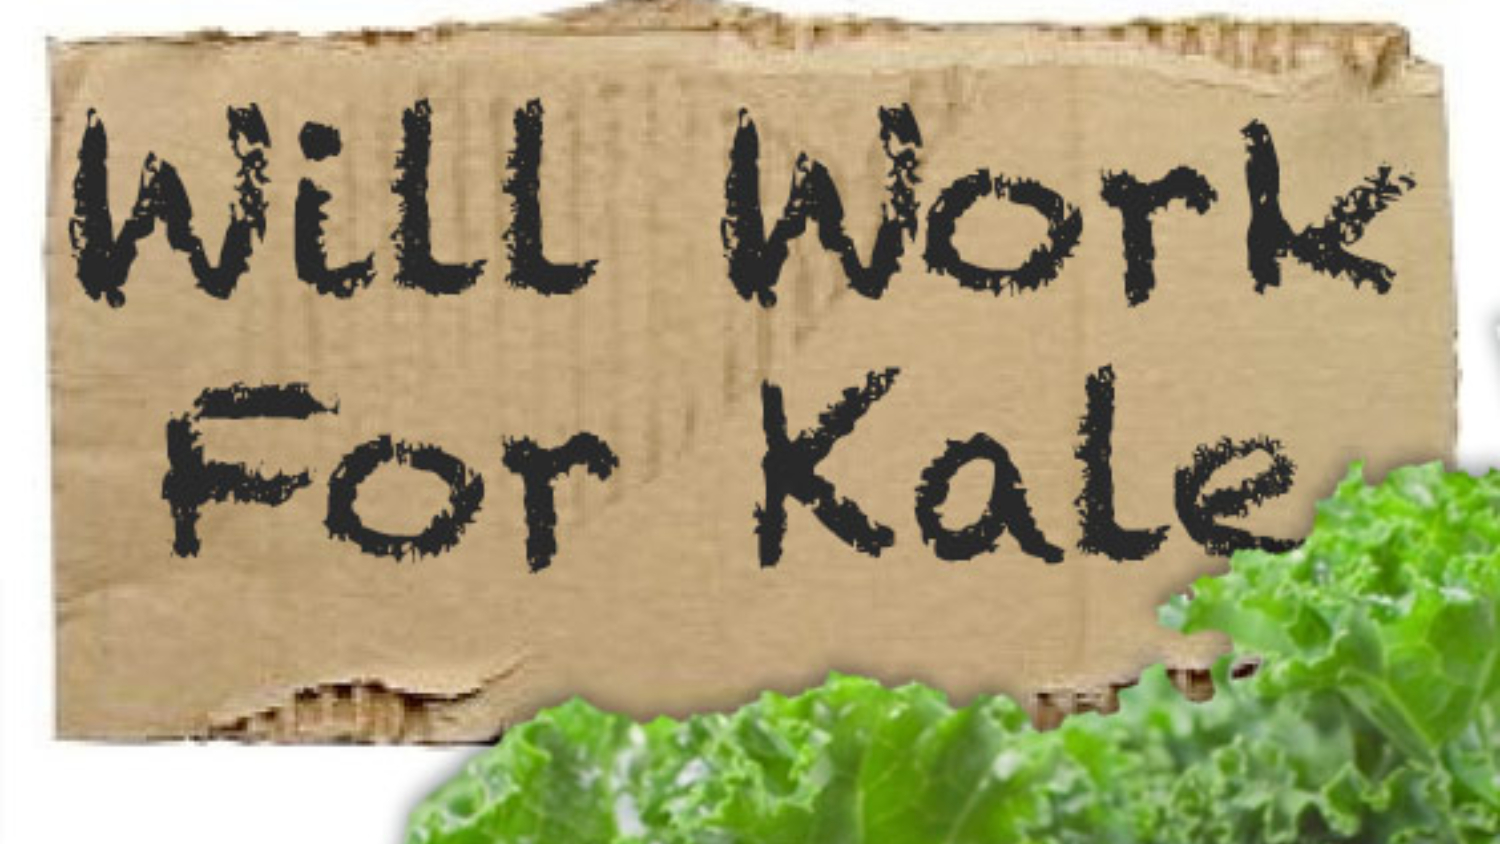 kale vegetable